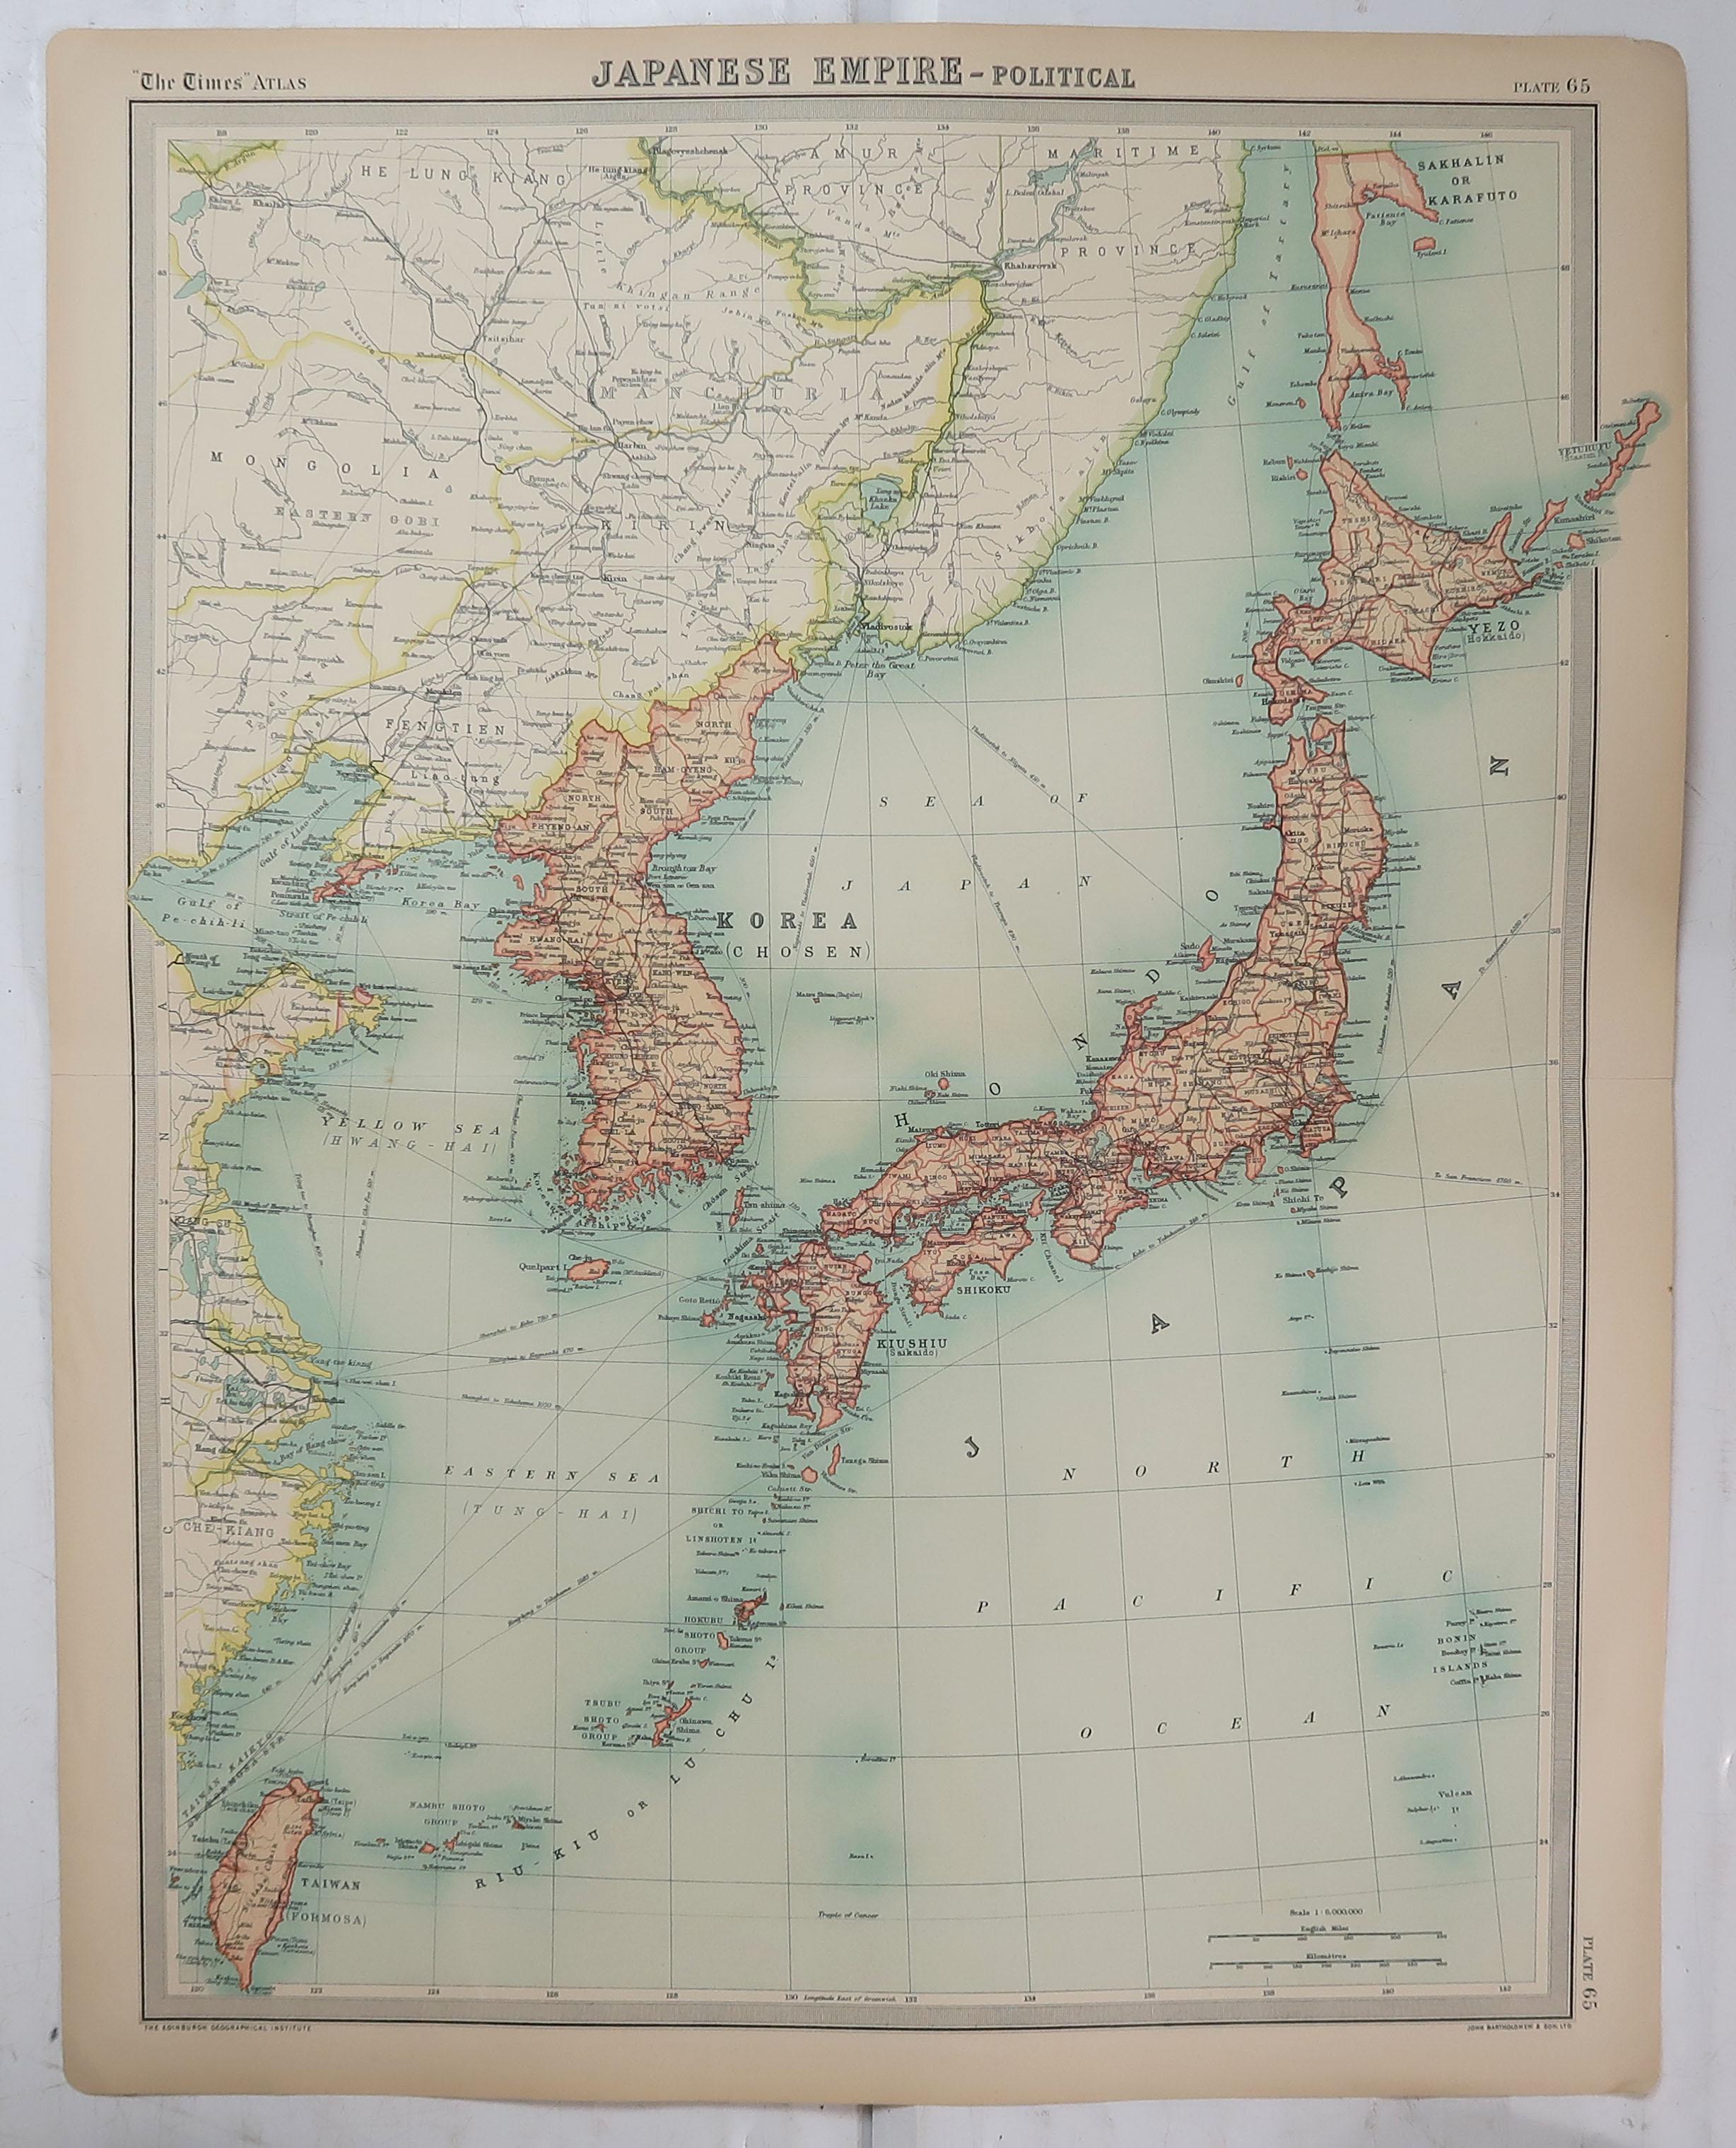 Other Large Original Vintage Map of Japan, circa 1920